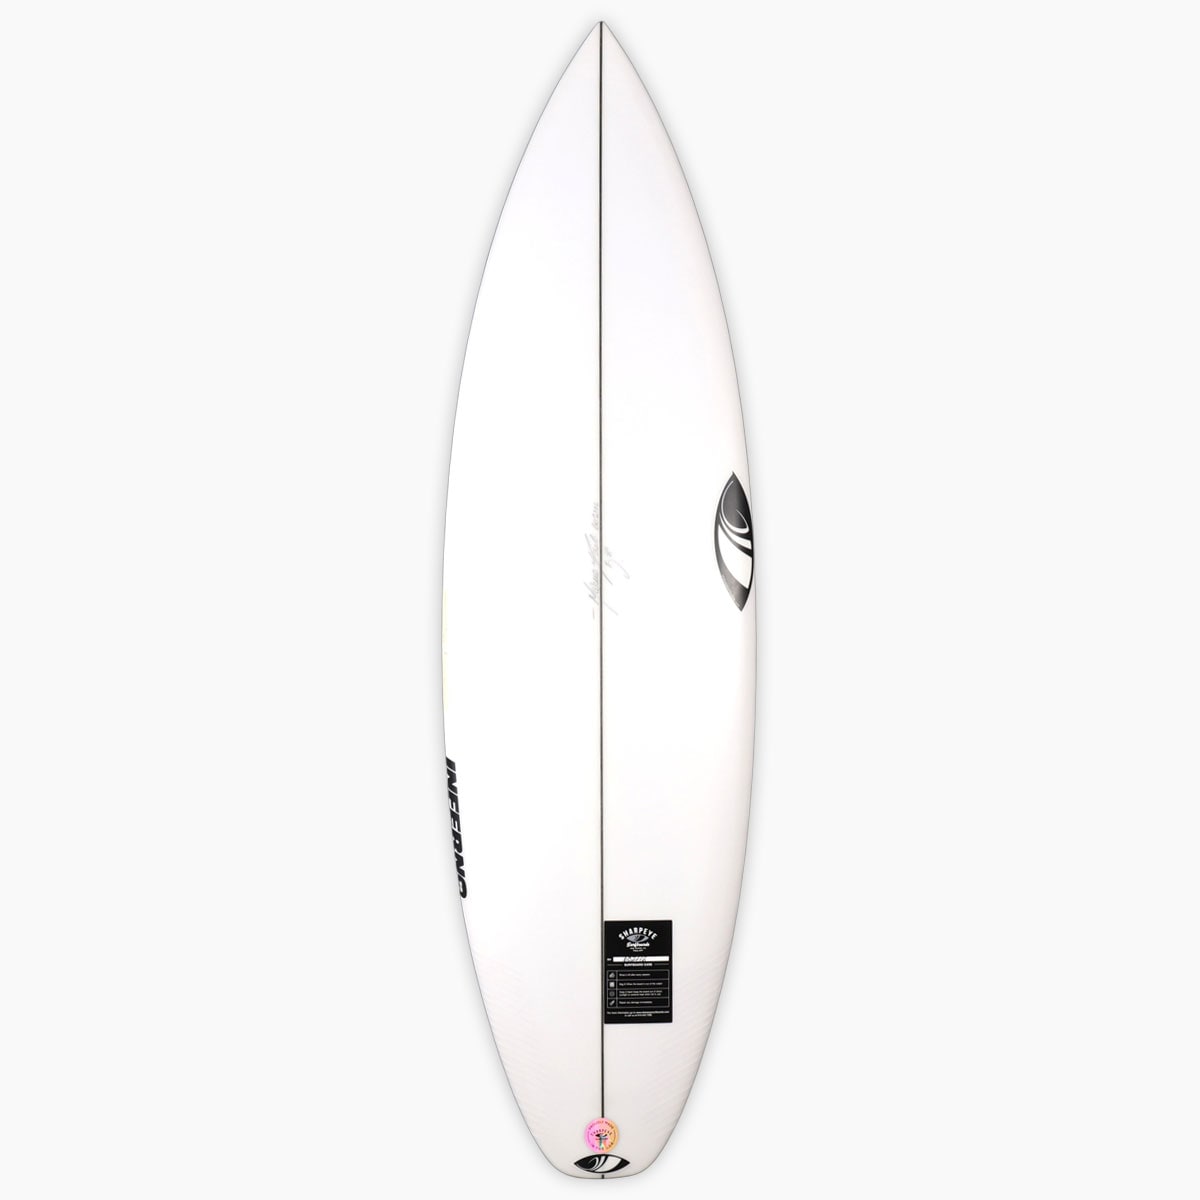 SurfBoardNet / ブランド:SHARP EYE SURFBOARDS モデル:INFERNO 72